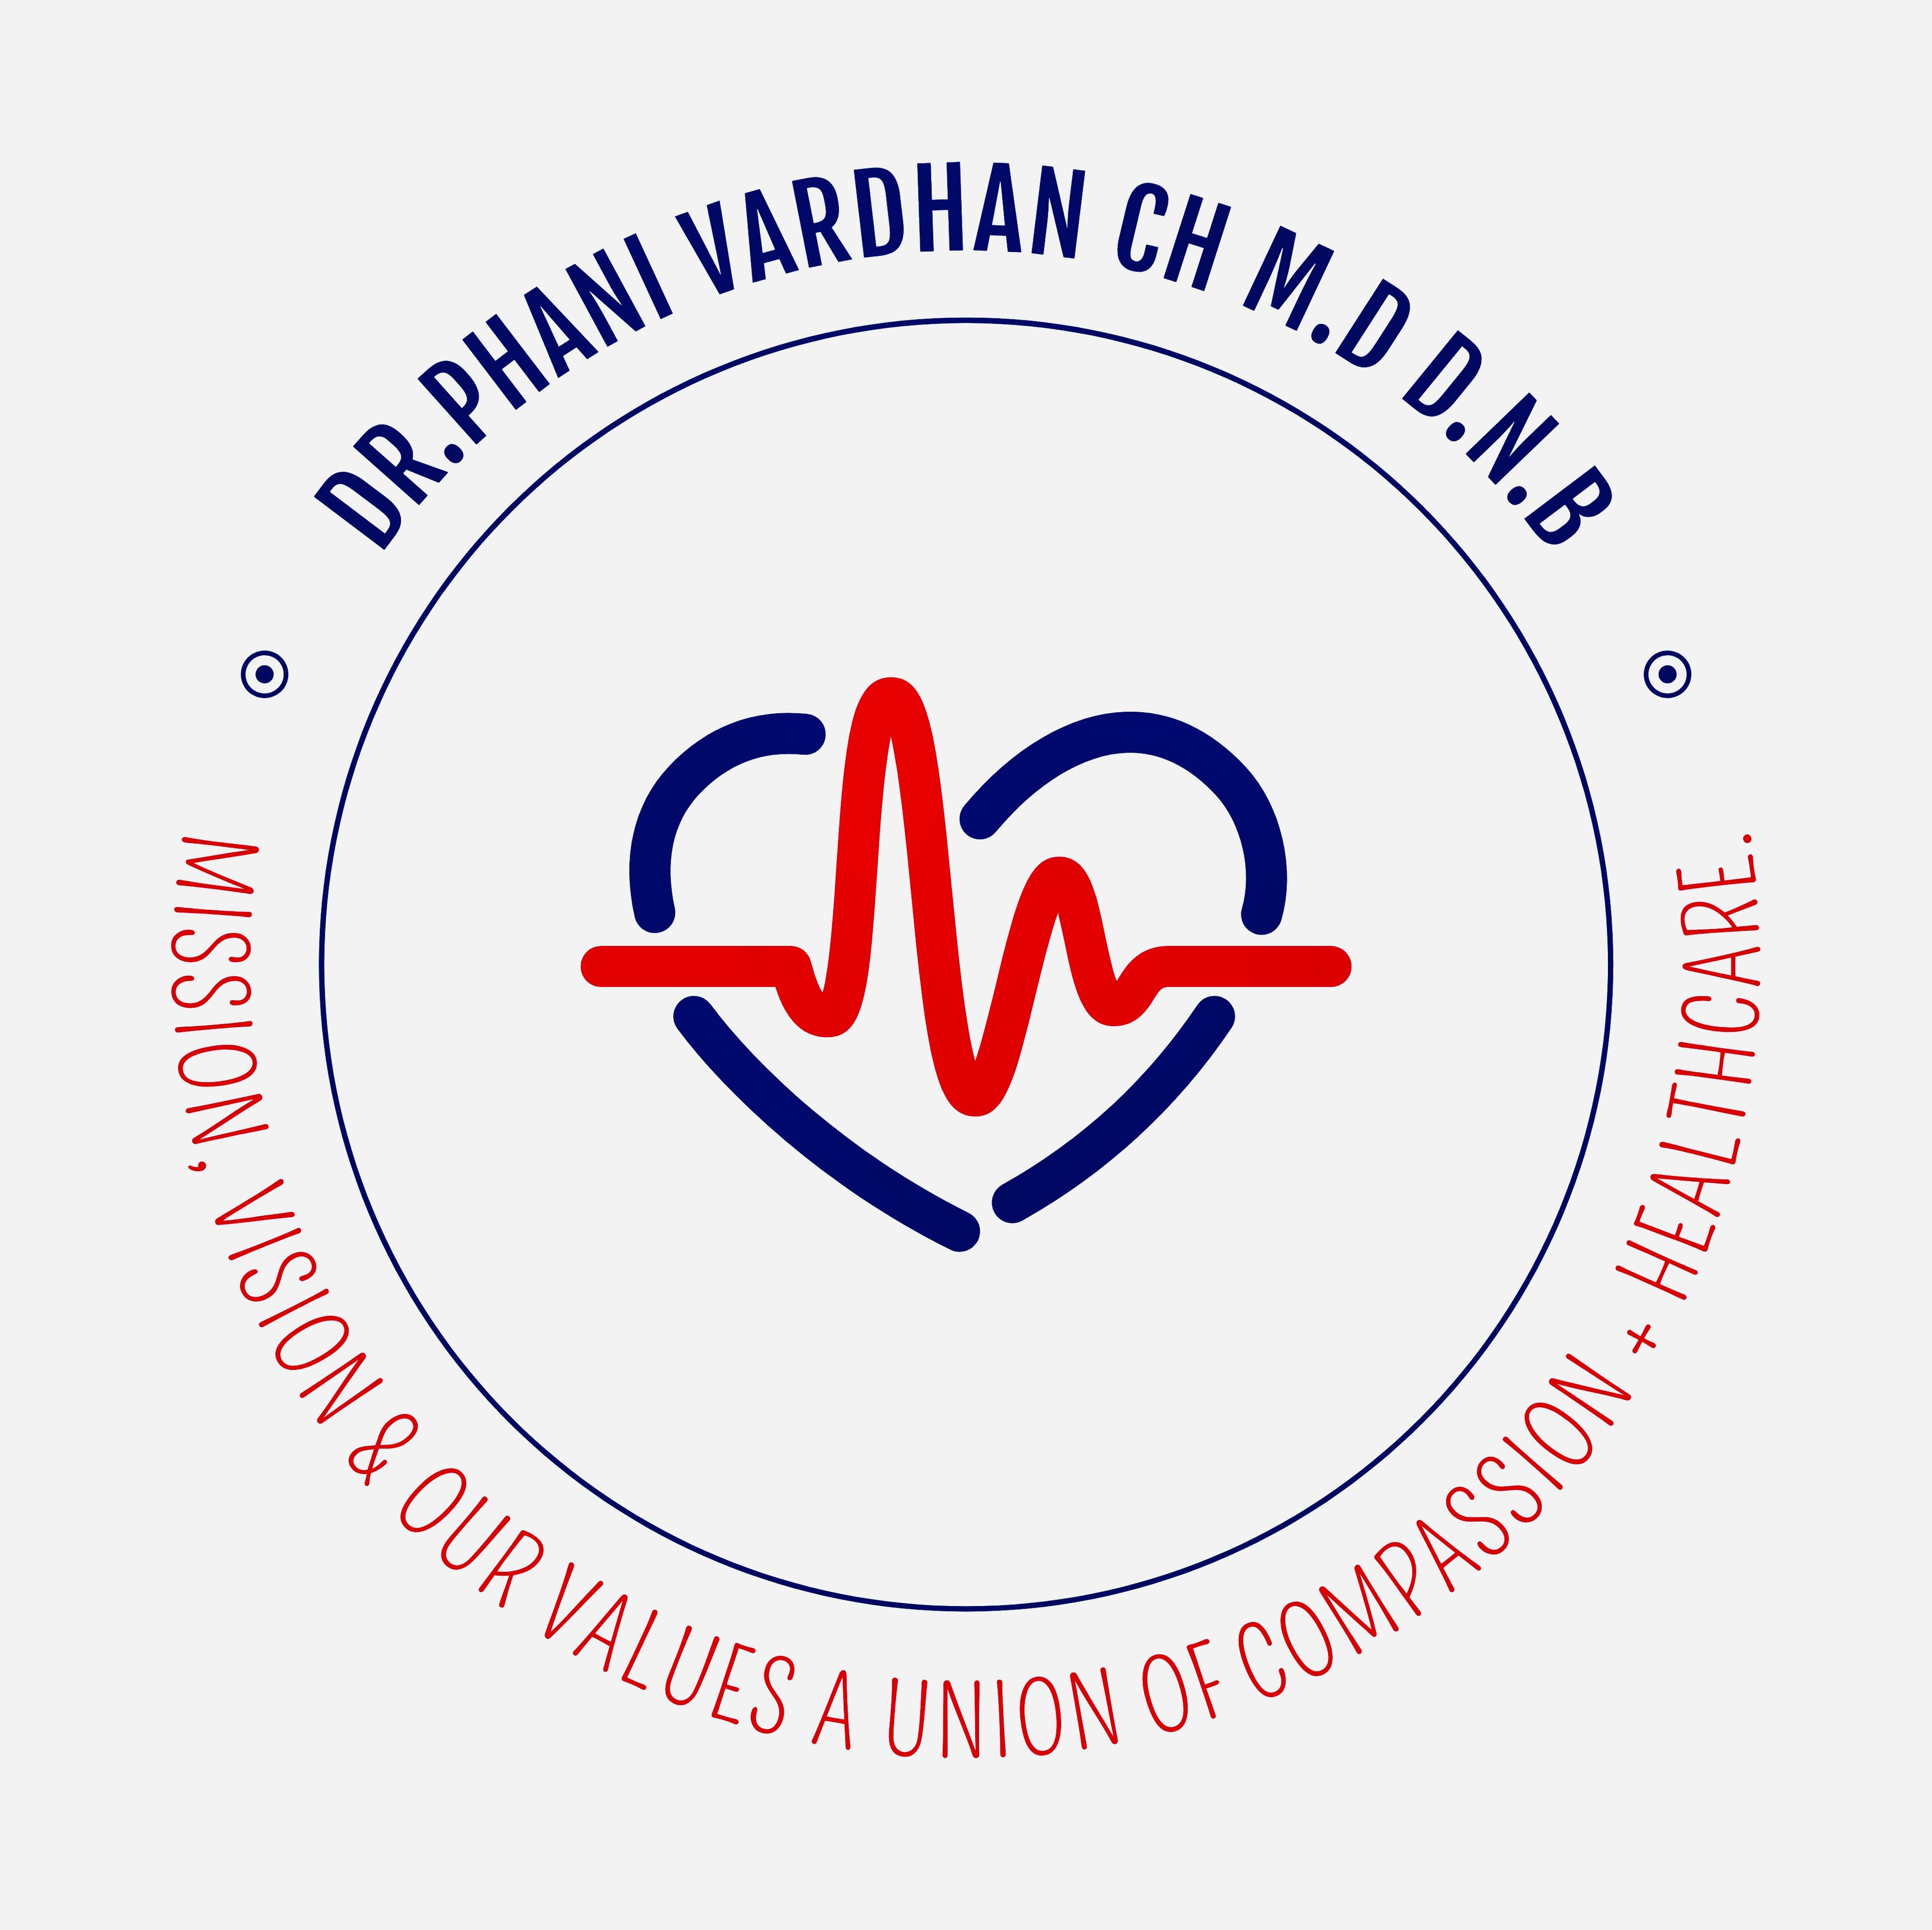 Dr. PHANI VARDHAN CH